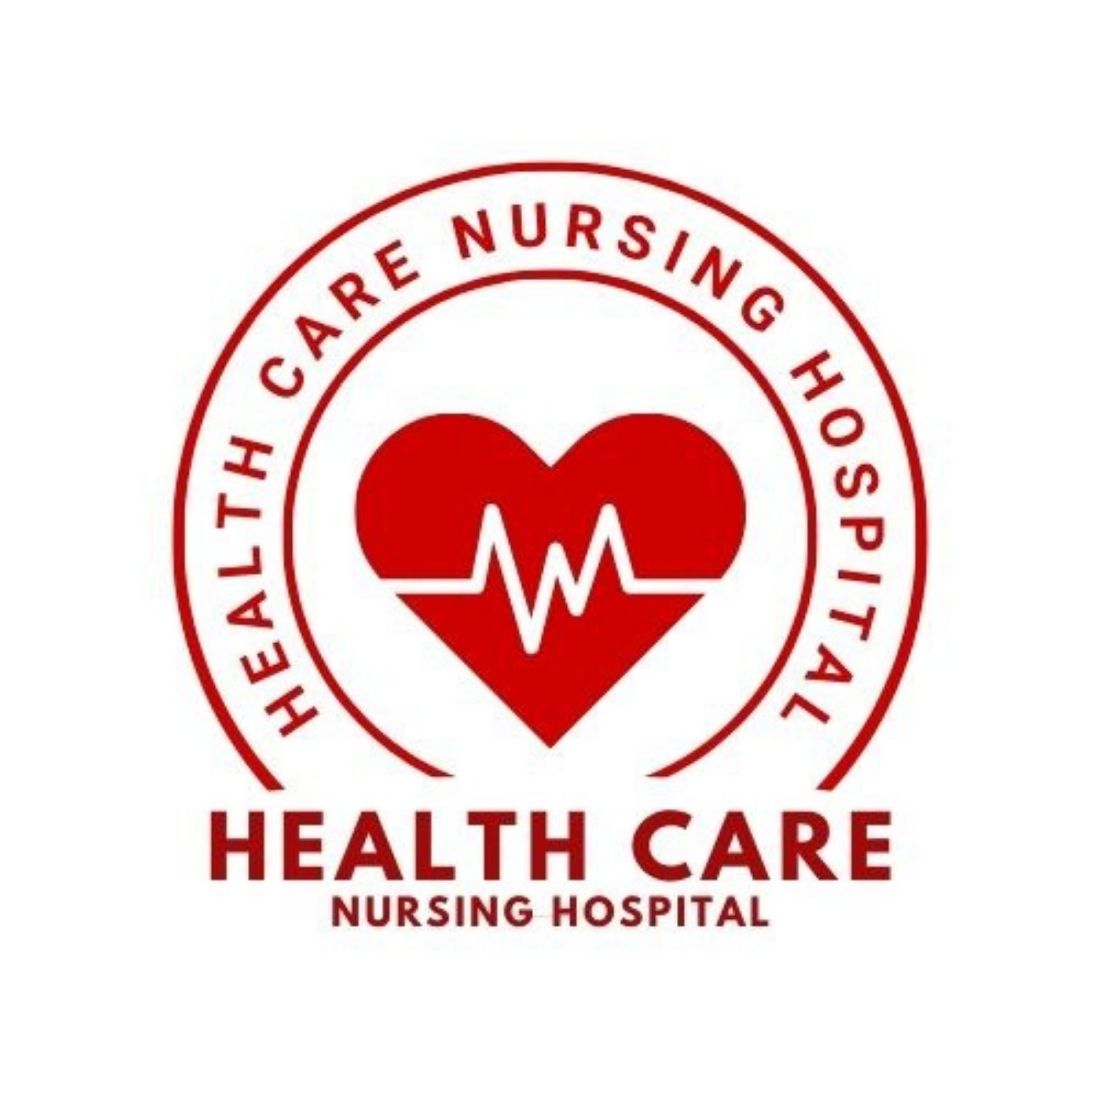 Editable Healthcare Logo Templates for Canva | Modern Medical Designs preview image.